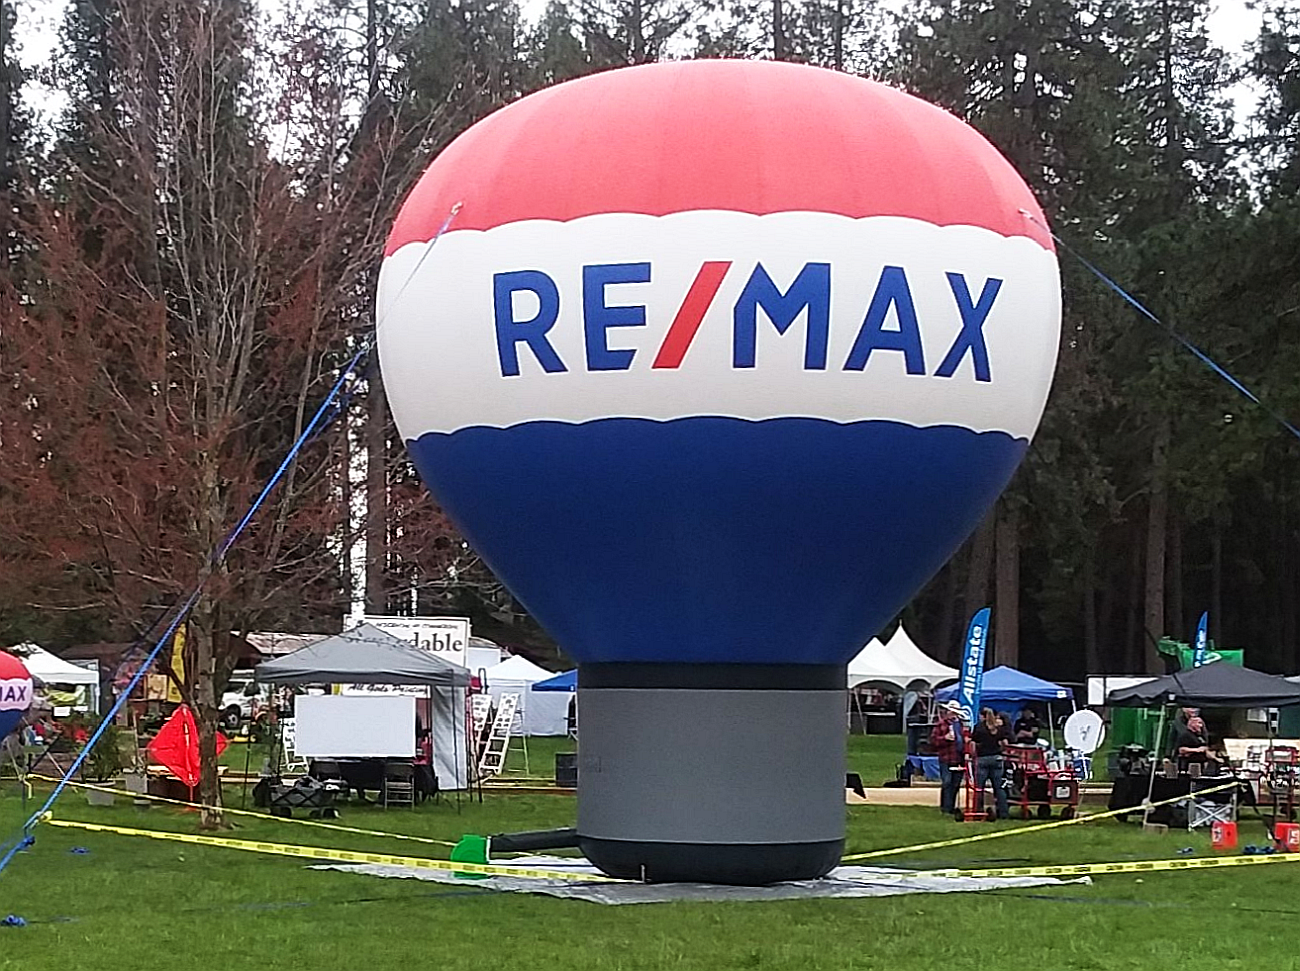 RE/MAX Hot Air Balloon - Northern California